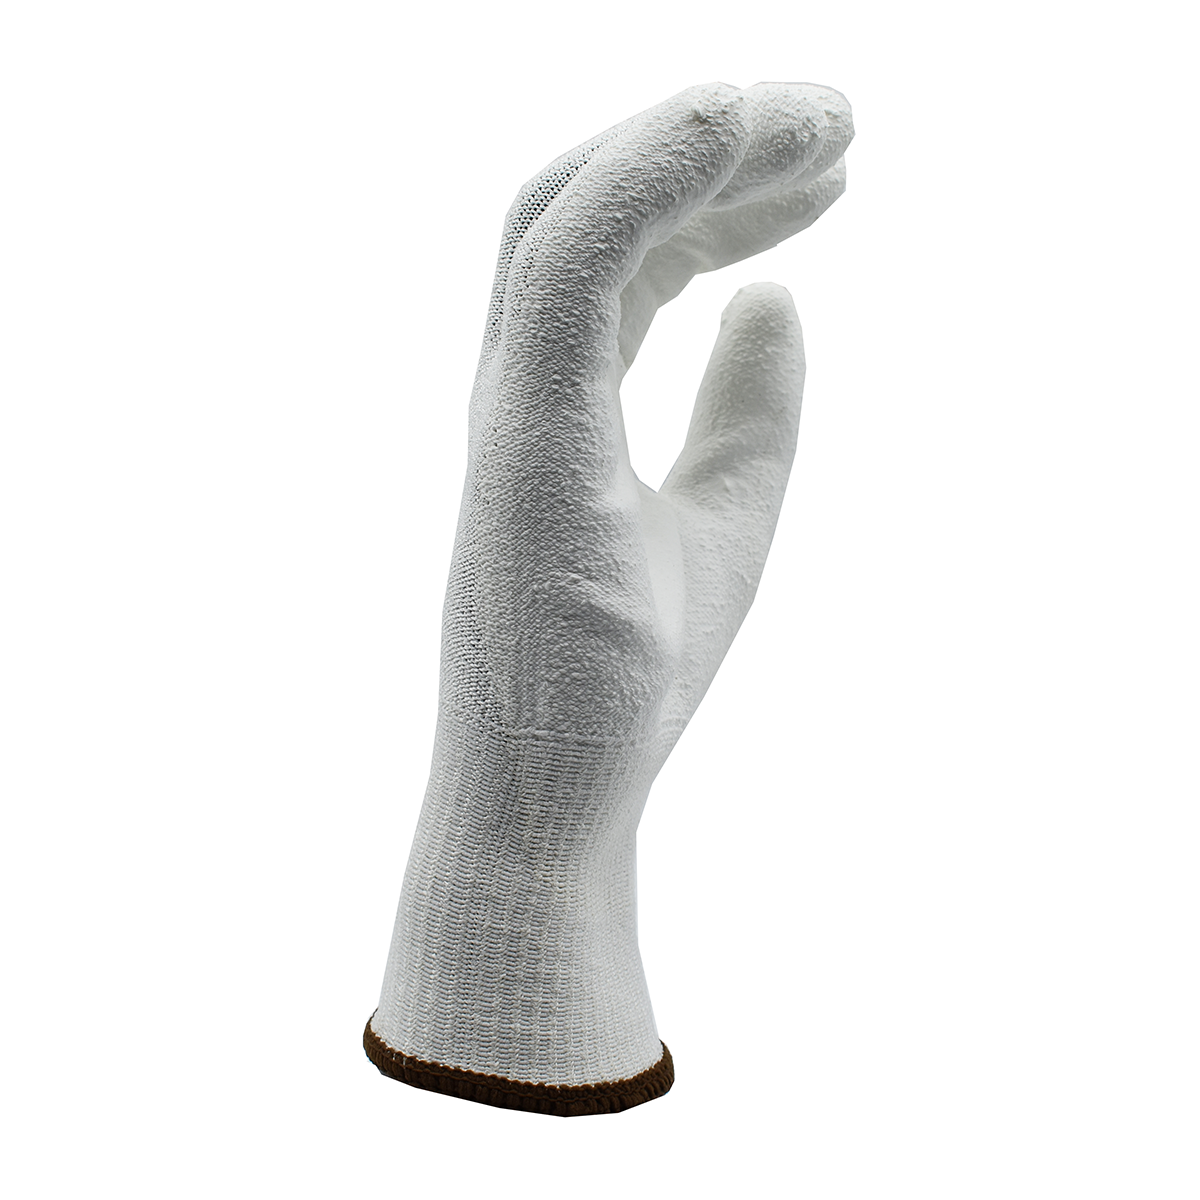 Cut-Resistant Gloves, ANSI Cut Level A3, Contact Heat Level 1, PU